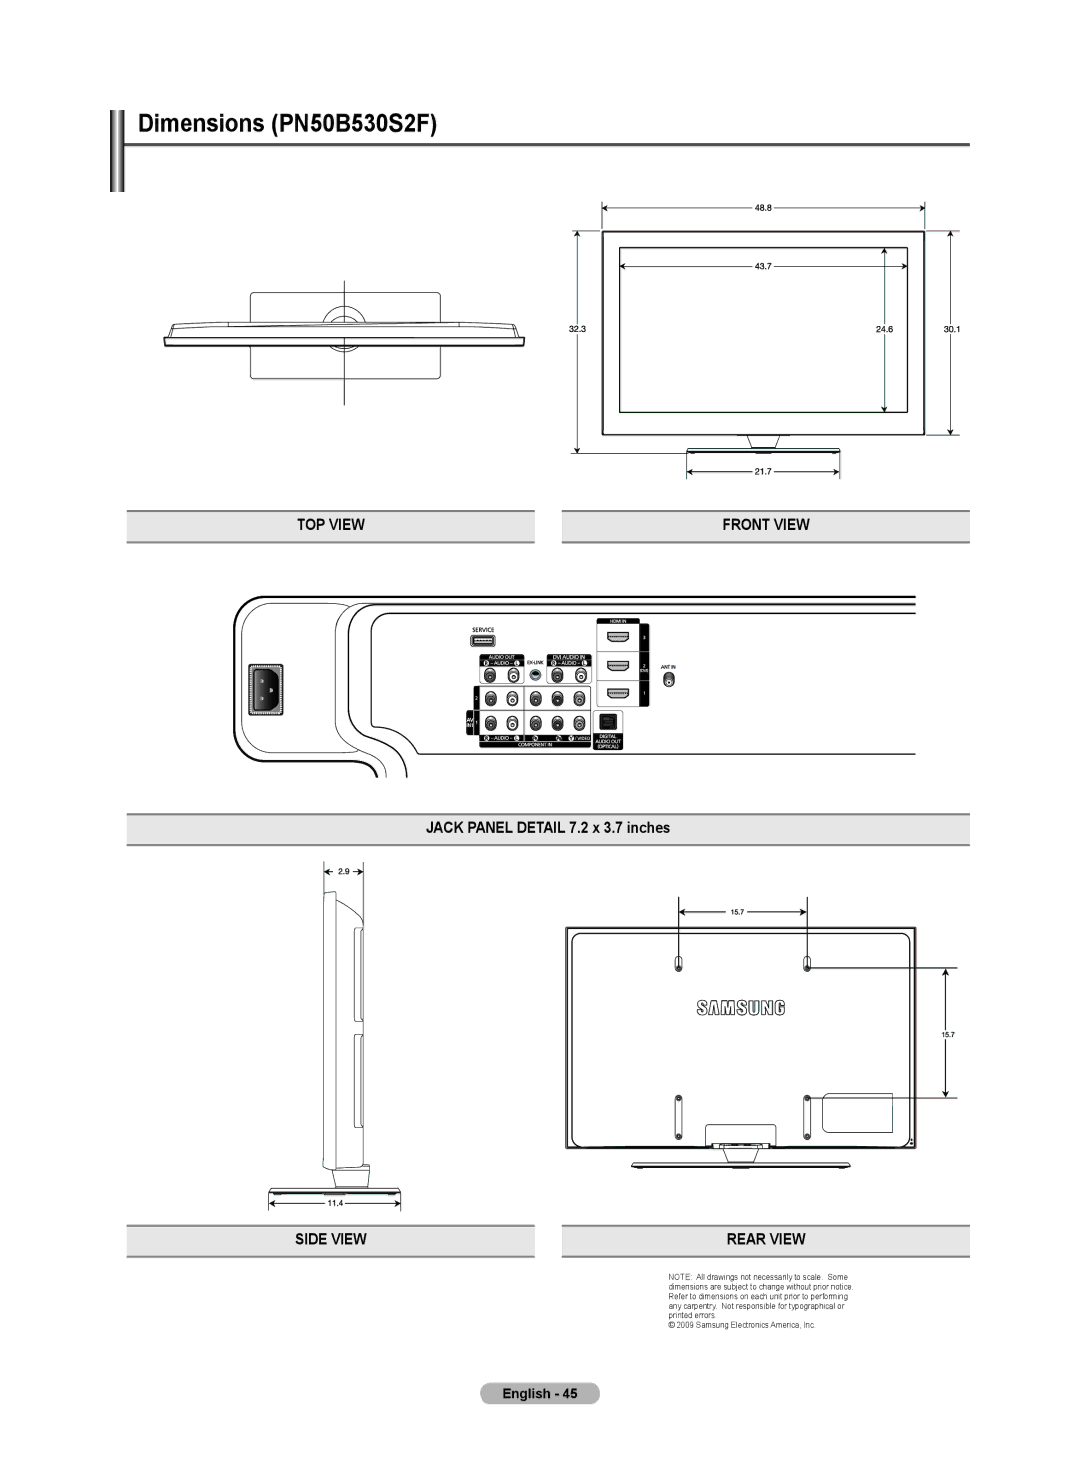 Samsung PN5B50SF, PN58B530S2F user manual Dimensions PN50B530S2F, Jack Panel Detail 7.2 x 3.7 inches 